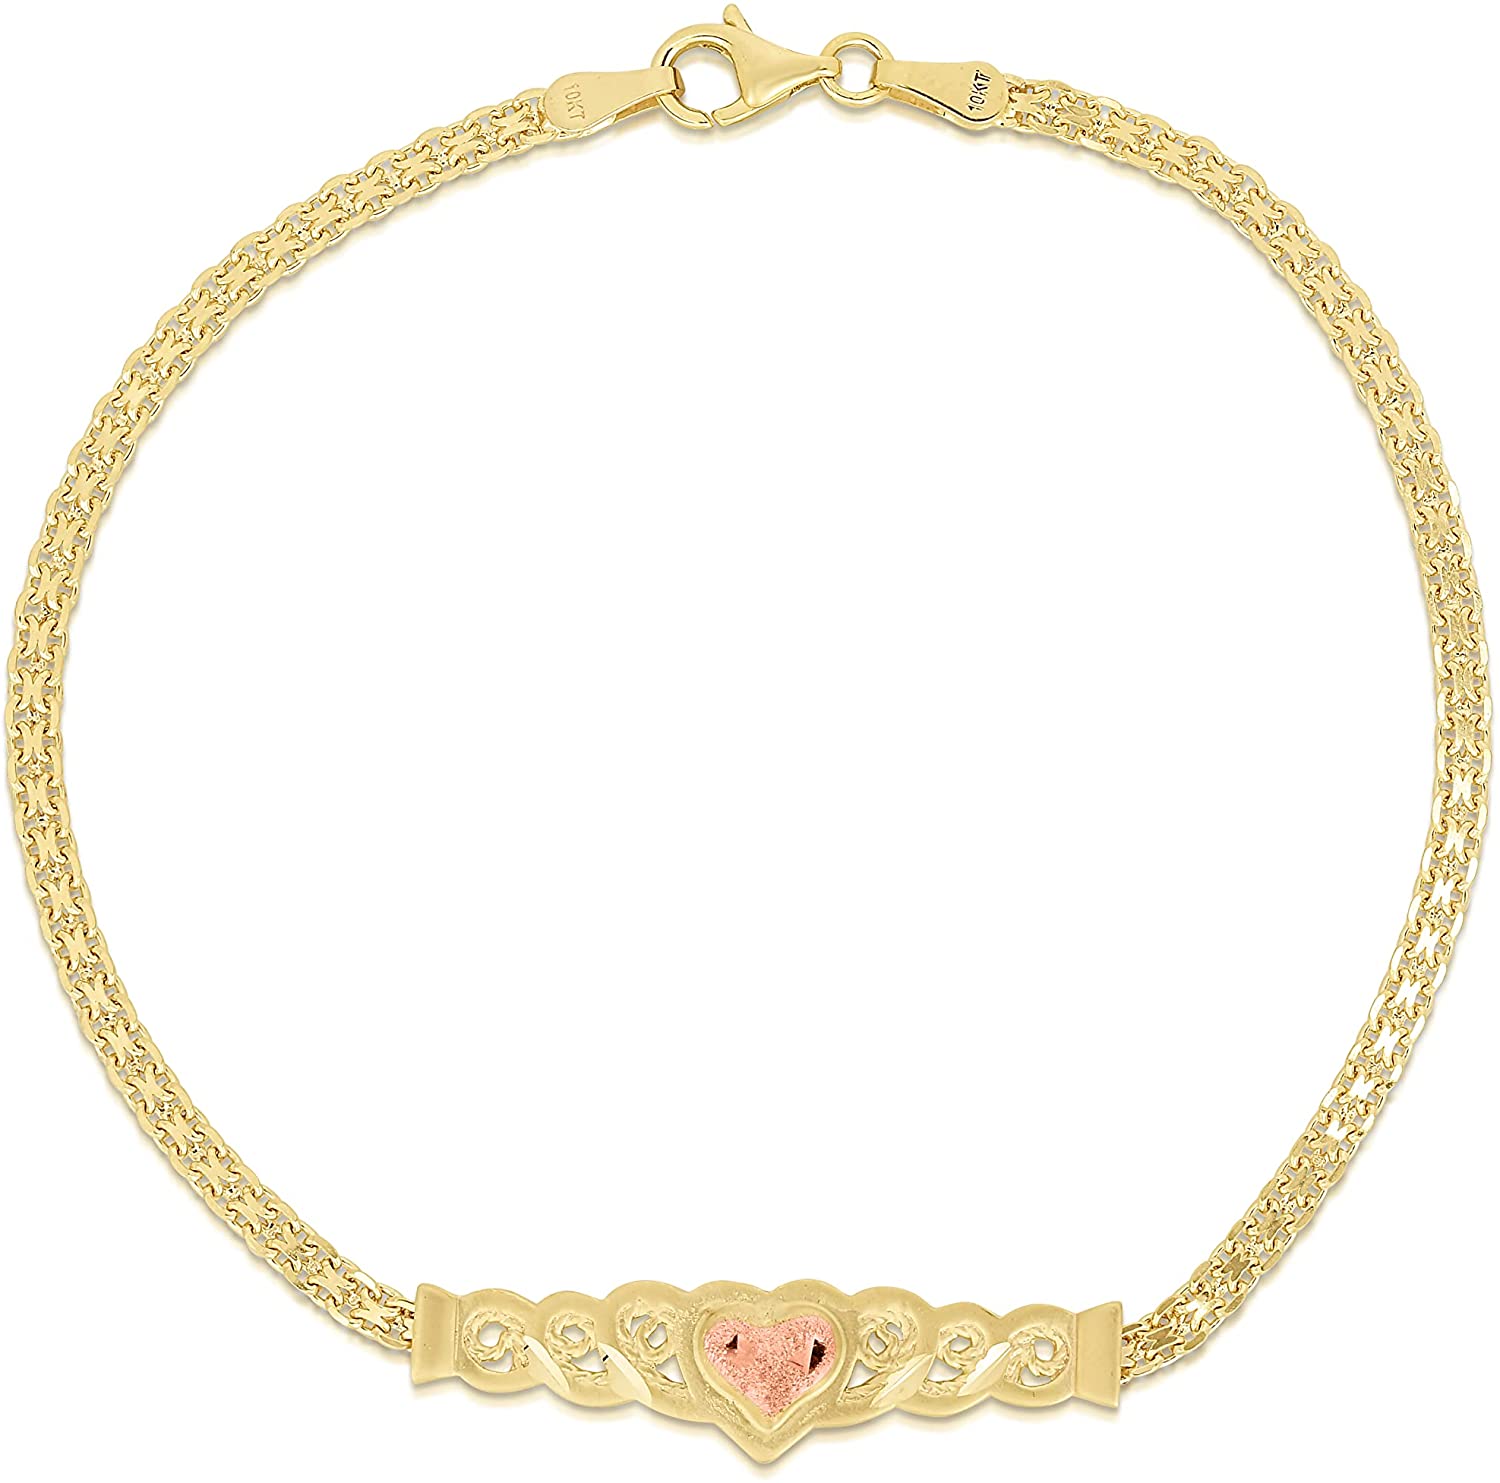 10k Yellow Gold Bismark Links with Rose Gold Heart Filigree Charm Bracelet